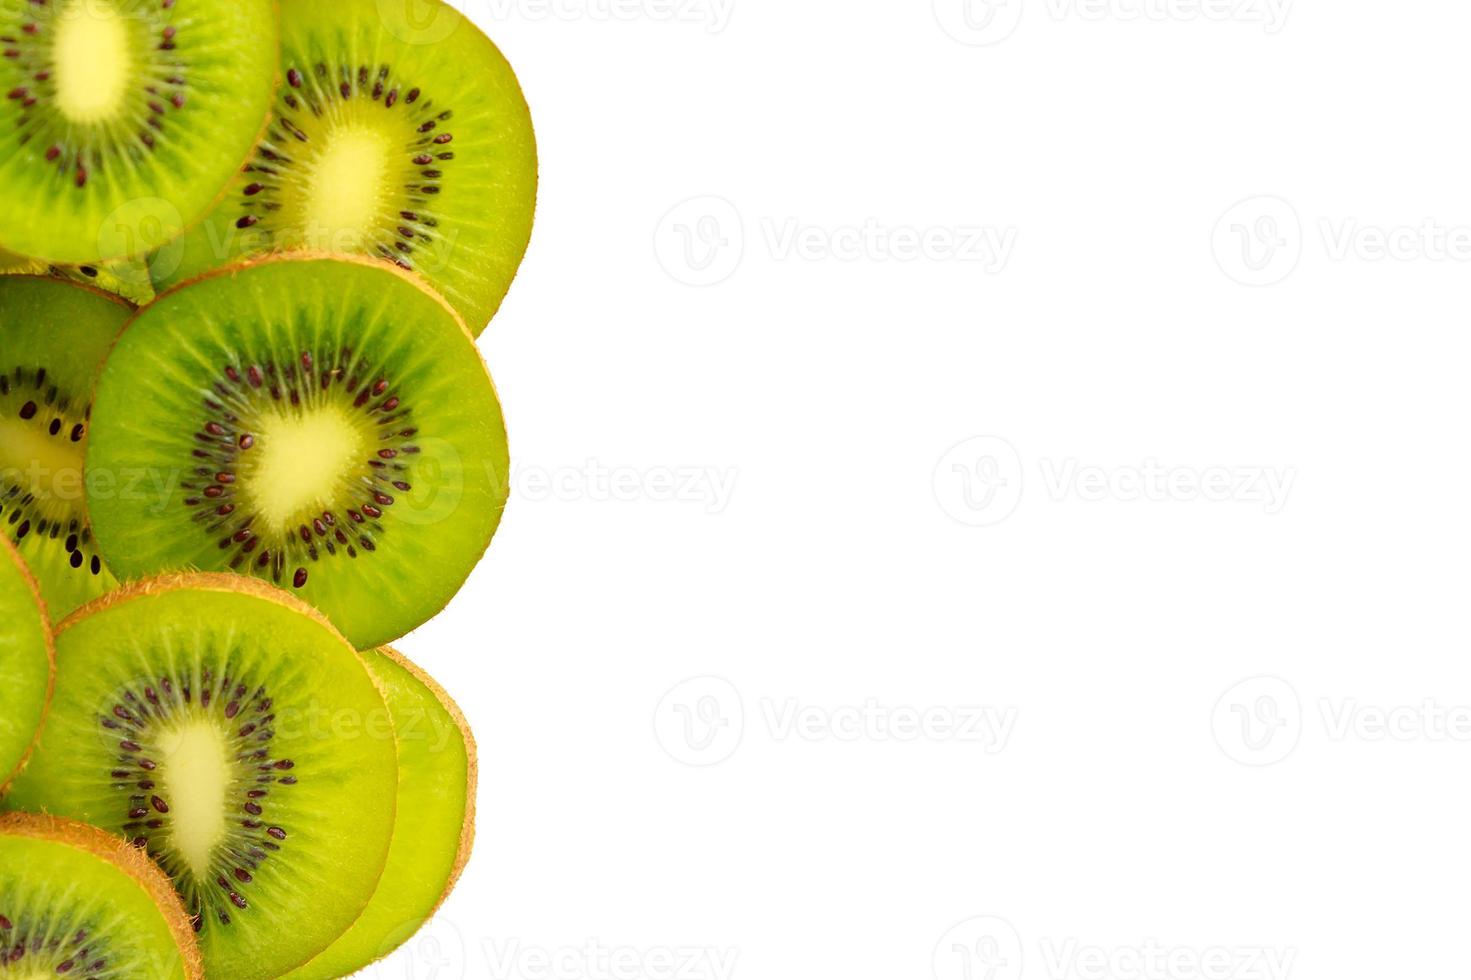 vers kiwifruit foto